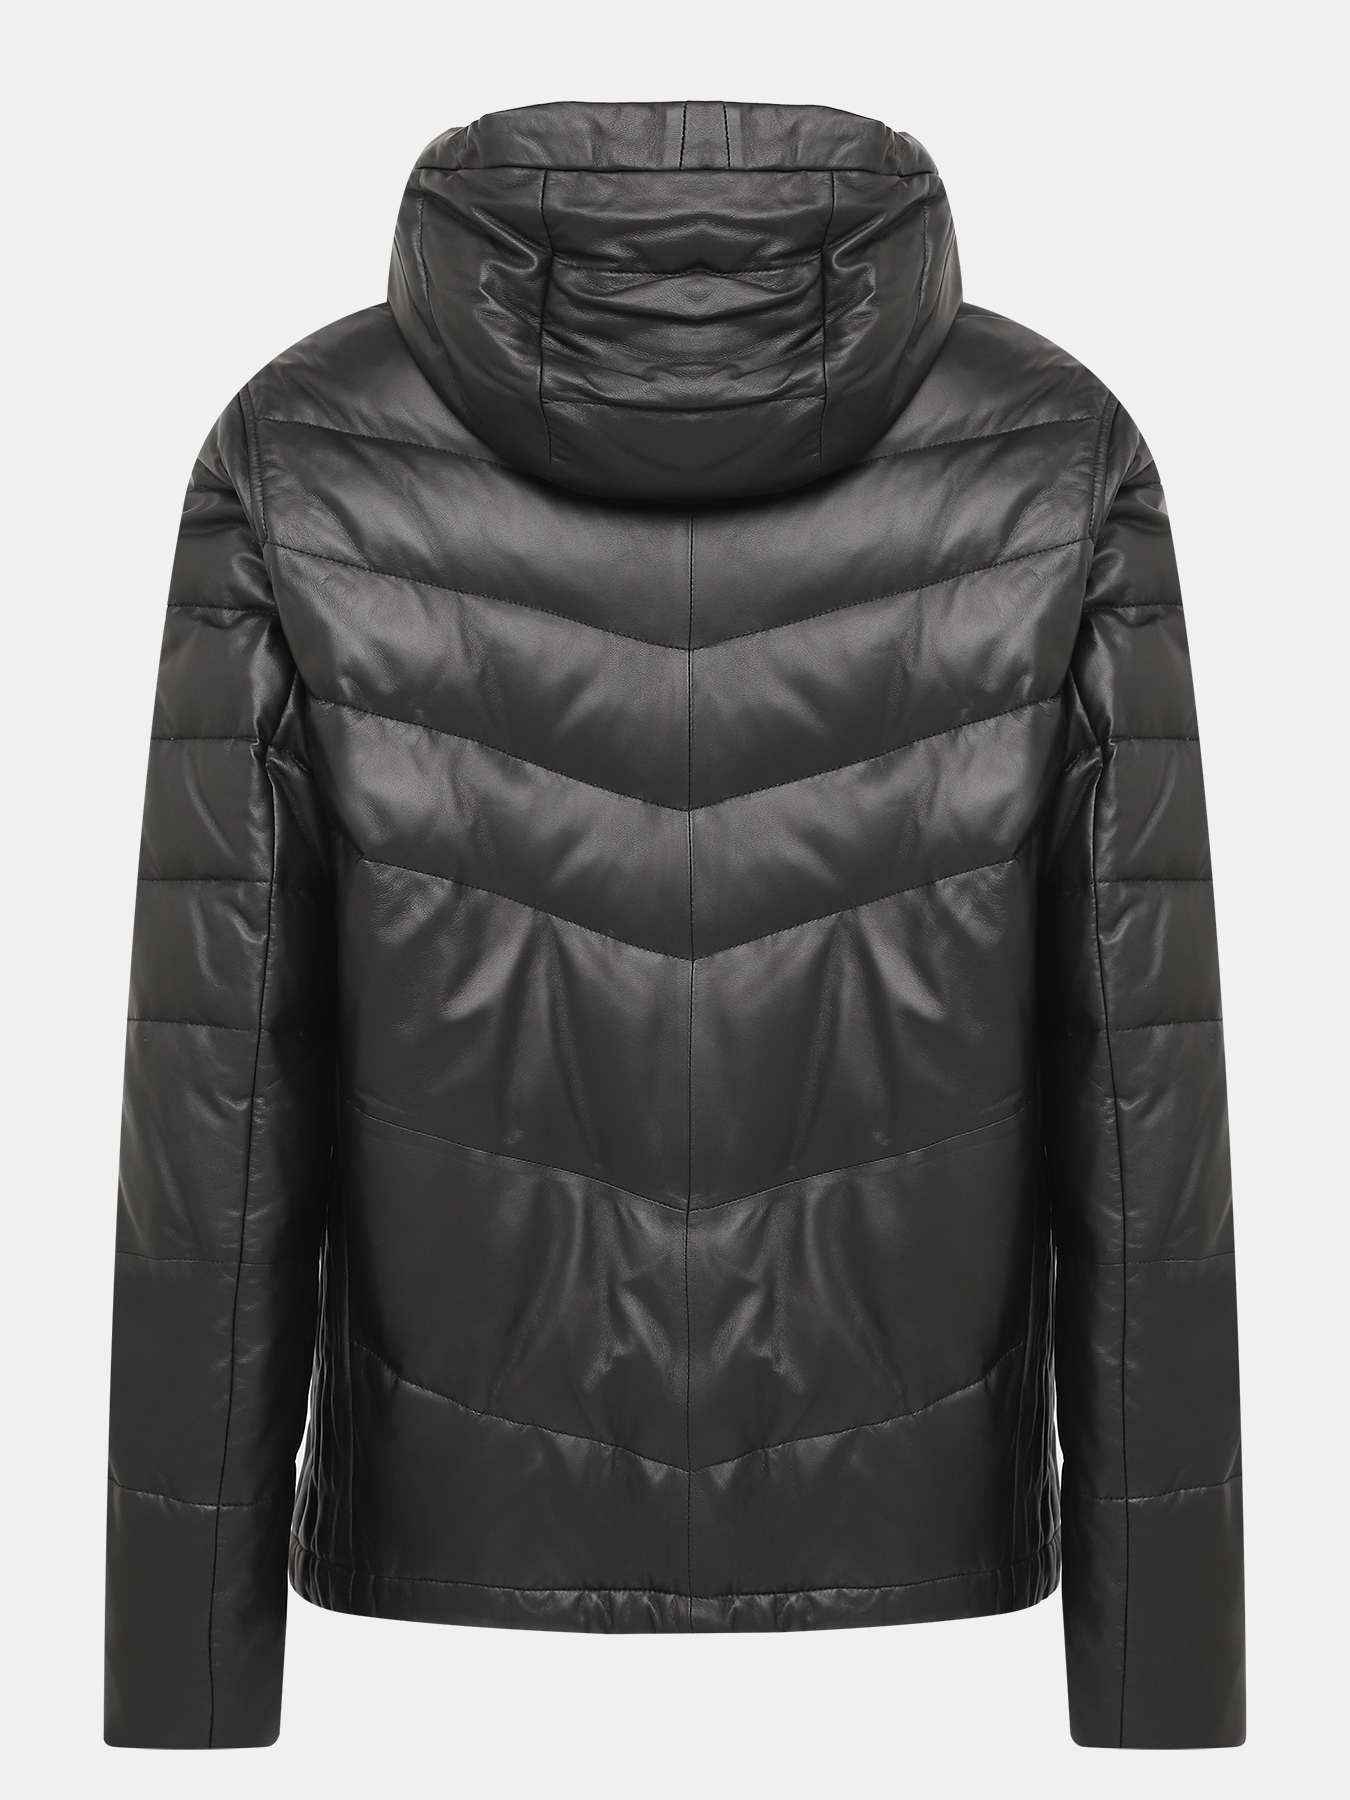 Кожаная куртка Ritter 417699-032, цвет черный, размер 62 - фото 5